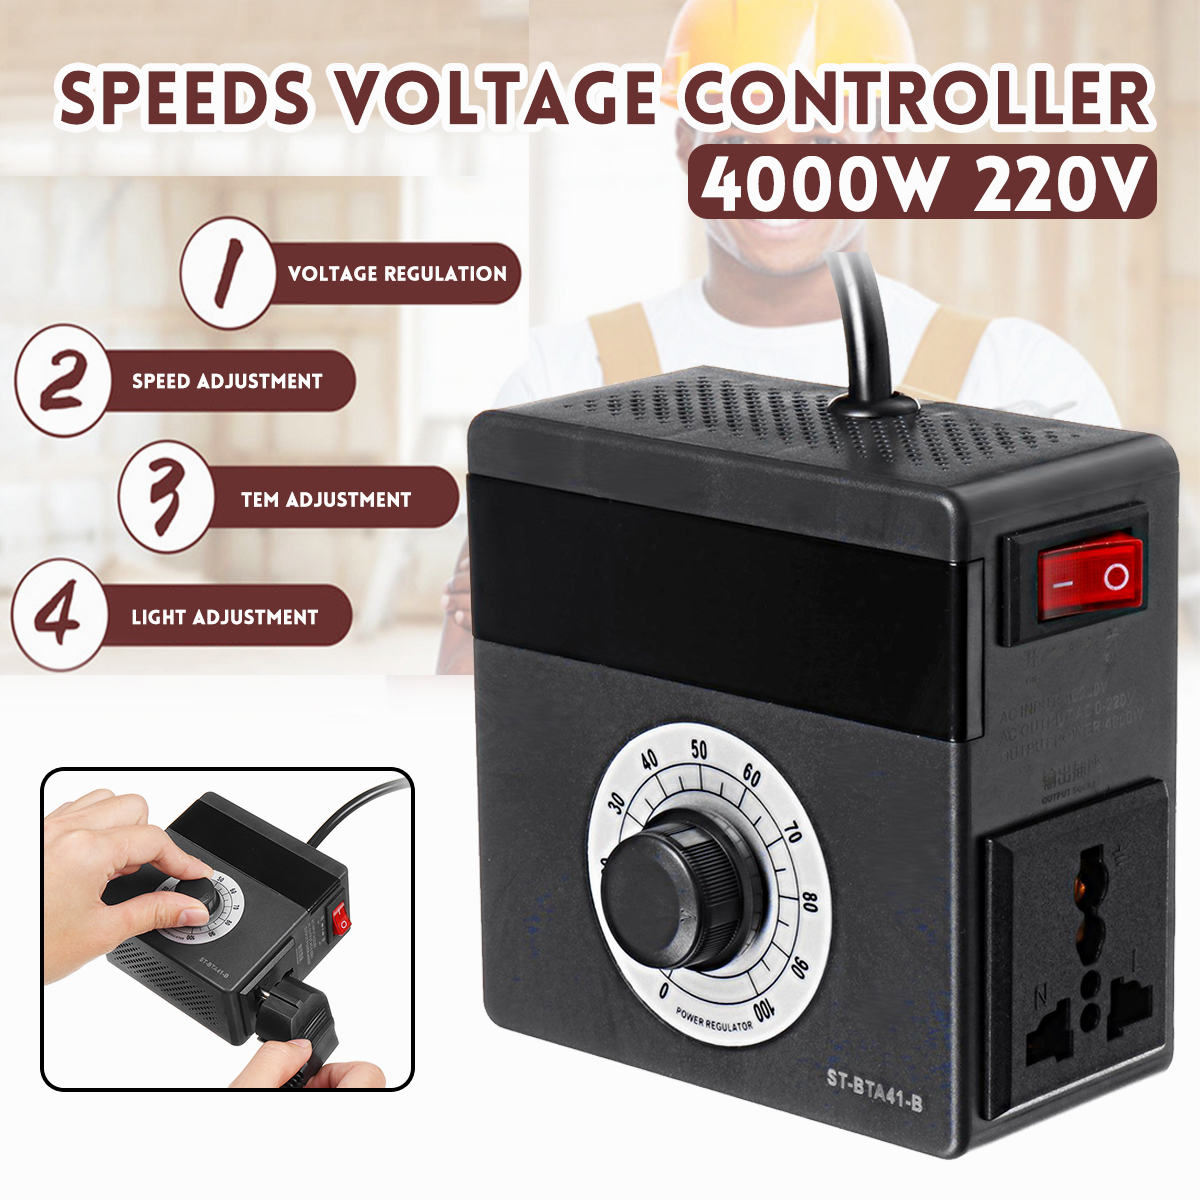 4000W-220V-Speeds-Voltage-Controller-Voltage-Regulation-Speed--Temperature-Adjustment-Voltage-Regula-1817565-2